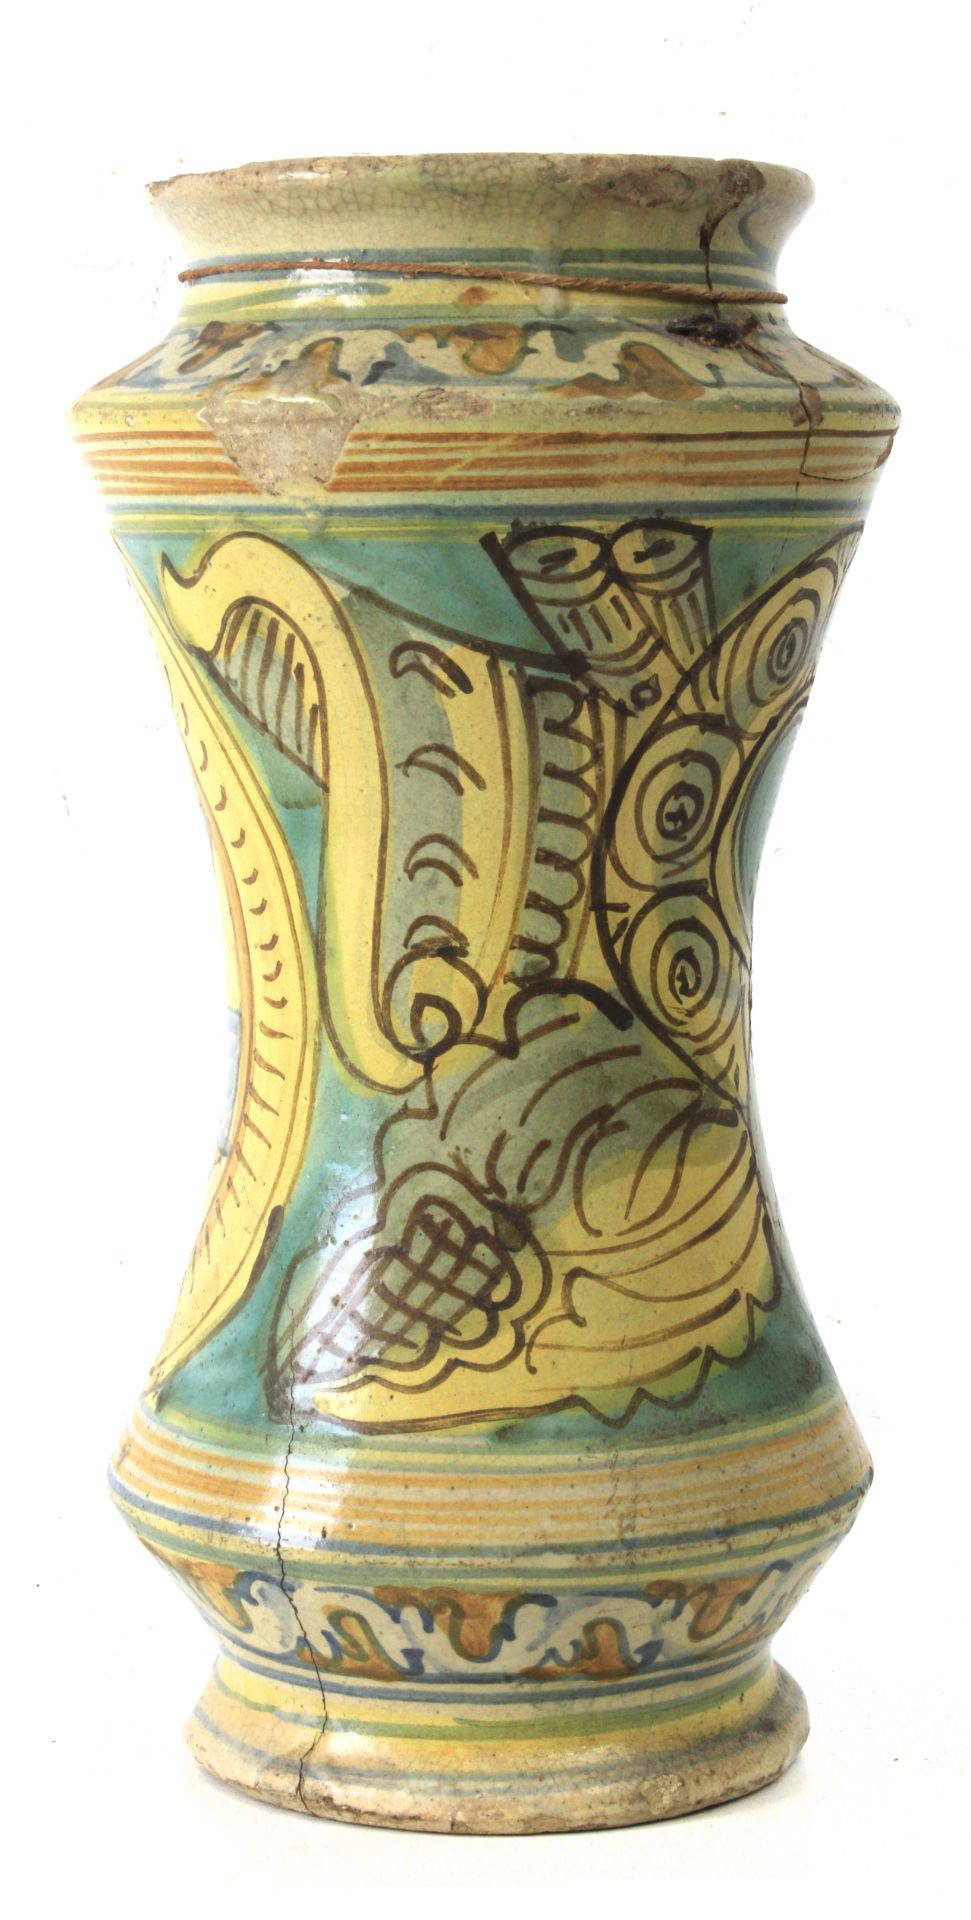 An 18th century Catalan pharmacy jar in Banyoles pottery